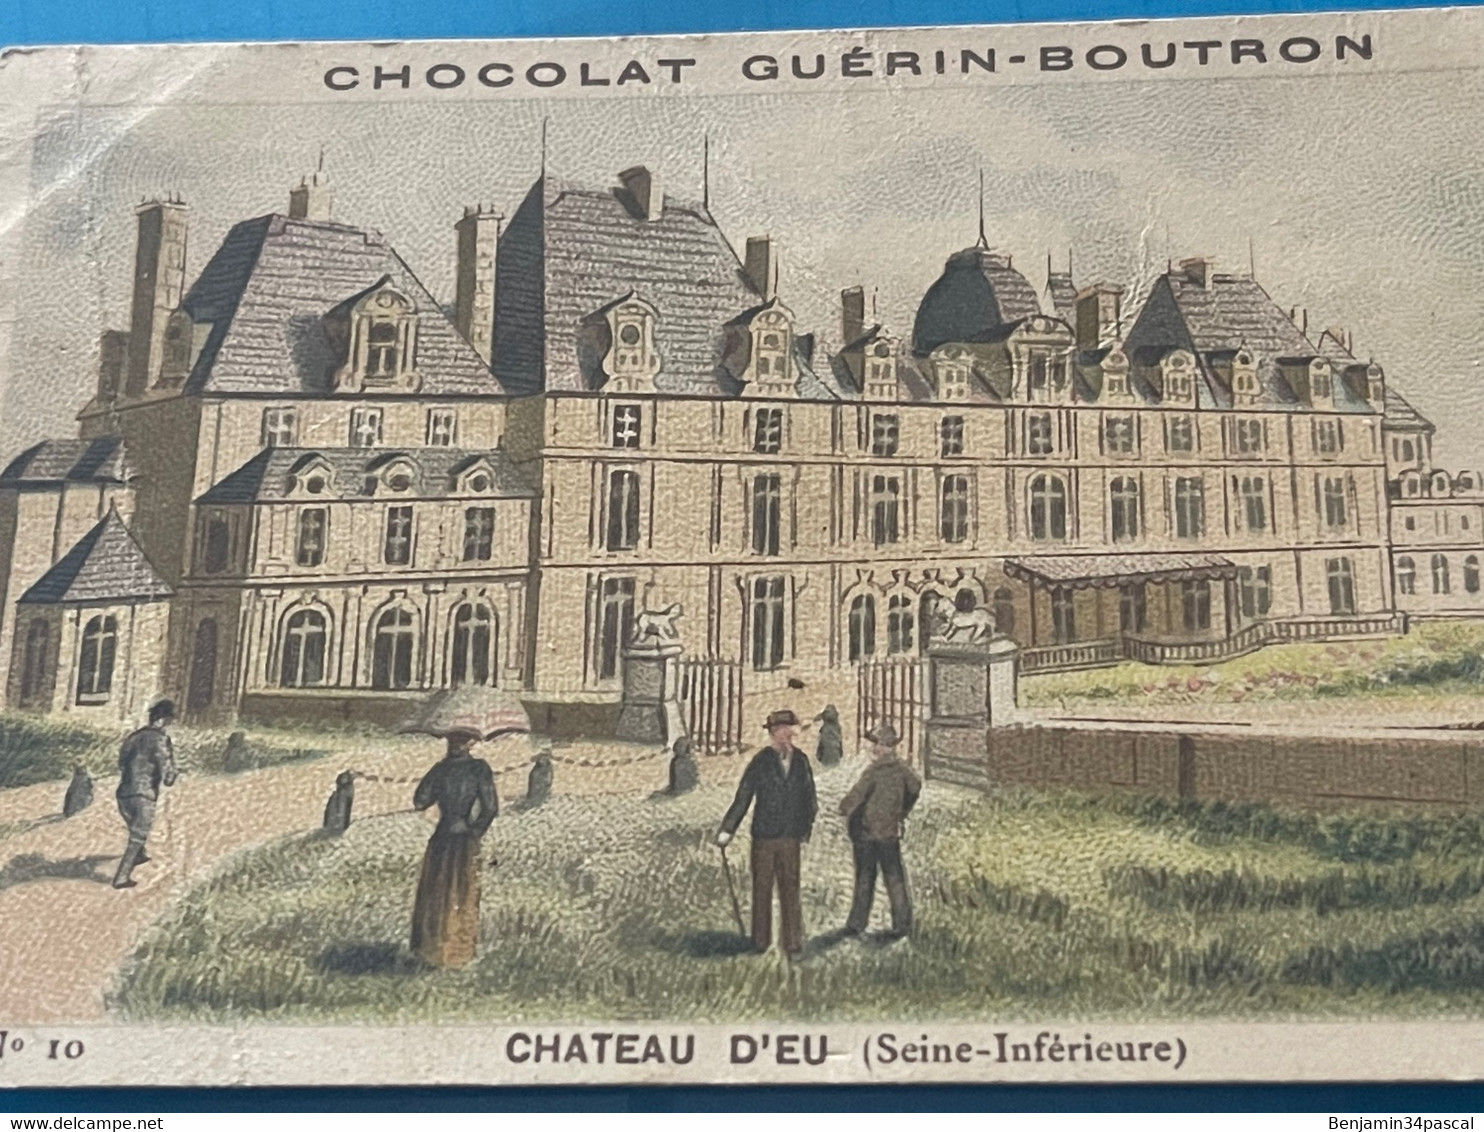 Chocolat GUÉRIN-BOUTRON Image -Chromo Ancienne - Château D’Eu ( Seine- Inférieure) - Chocolat